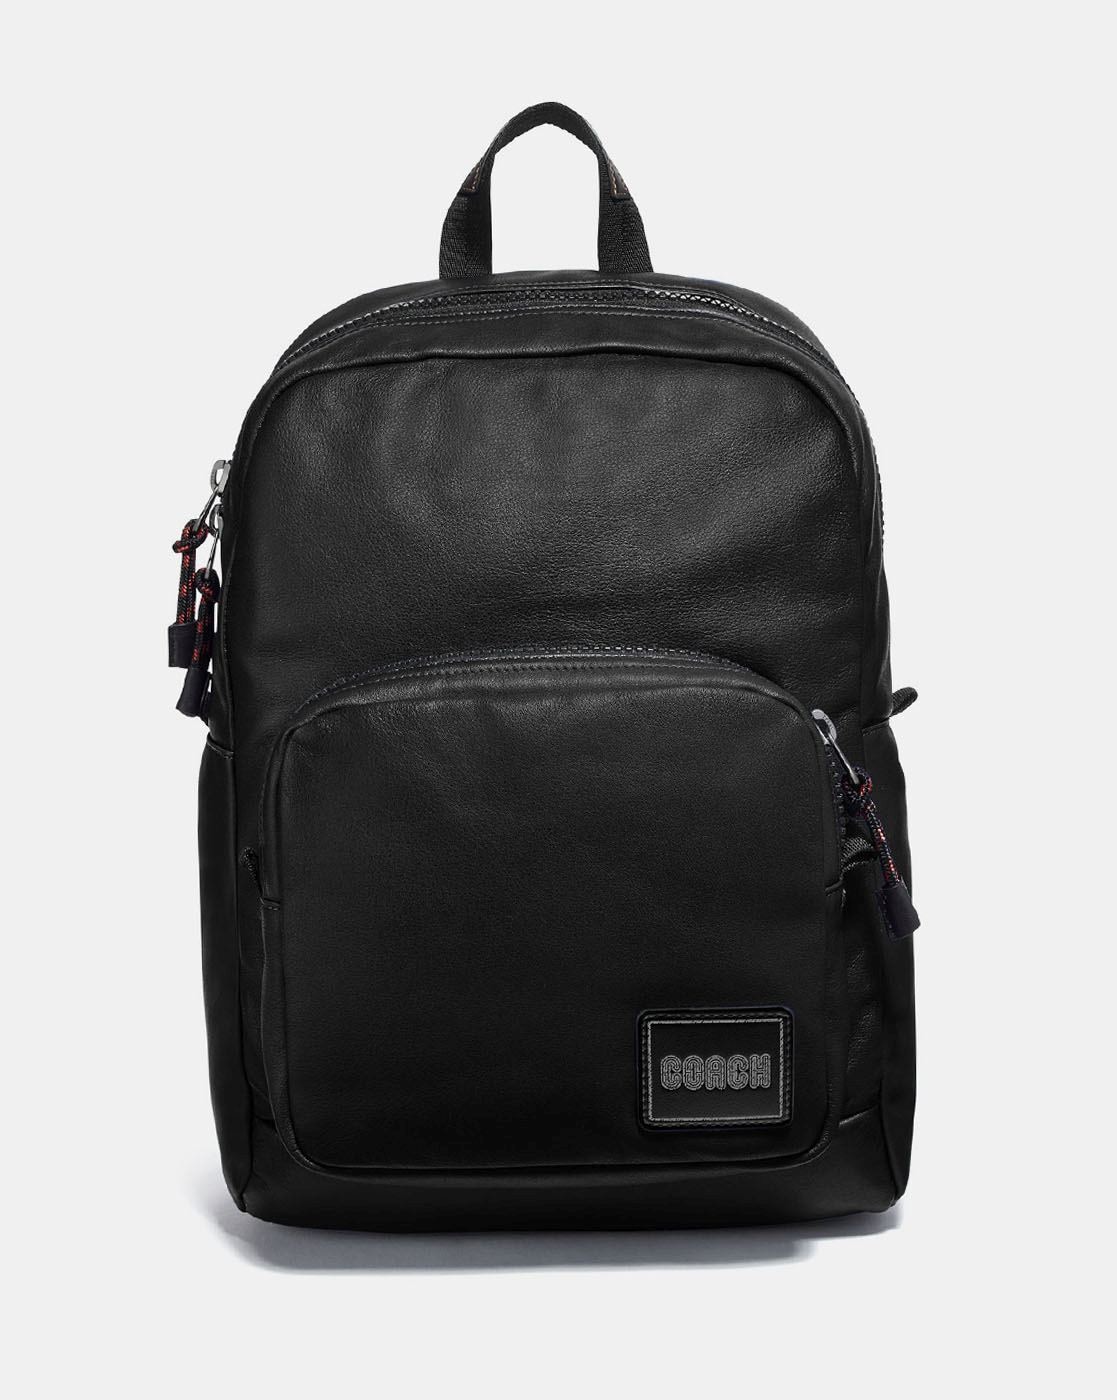 Coach | Bags | Nwt Coach Court Leather Backpack | Poshmark